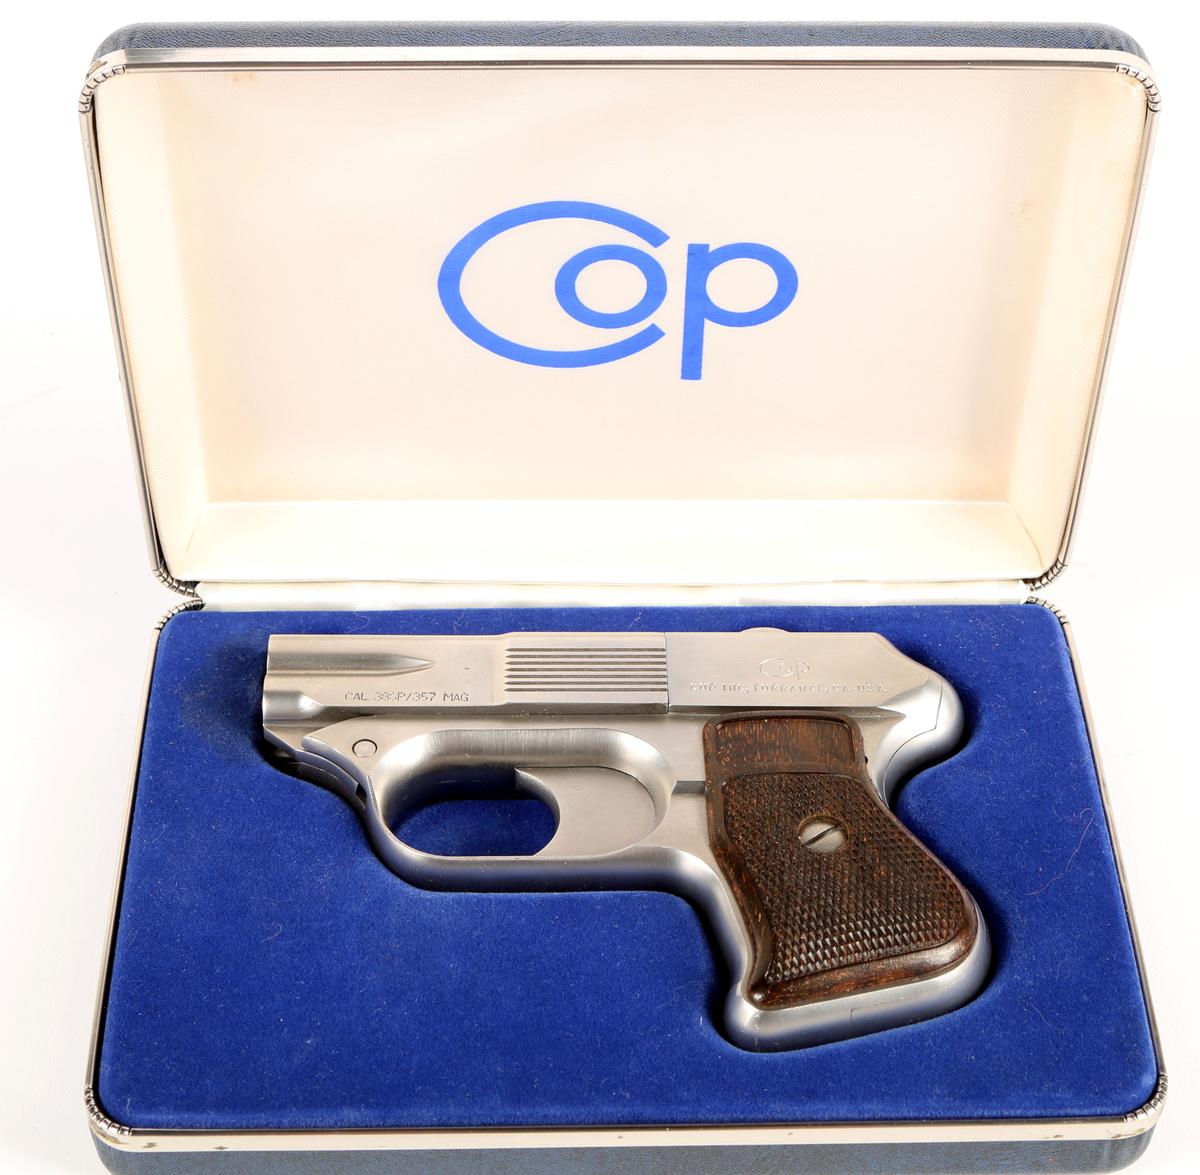 COP Model SS-1 in .357 Magnum